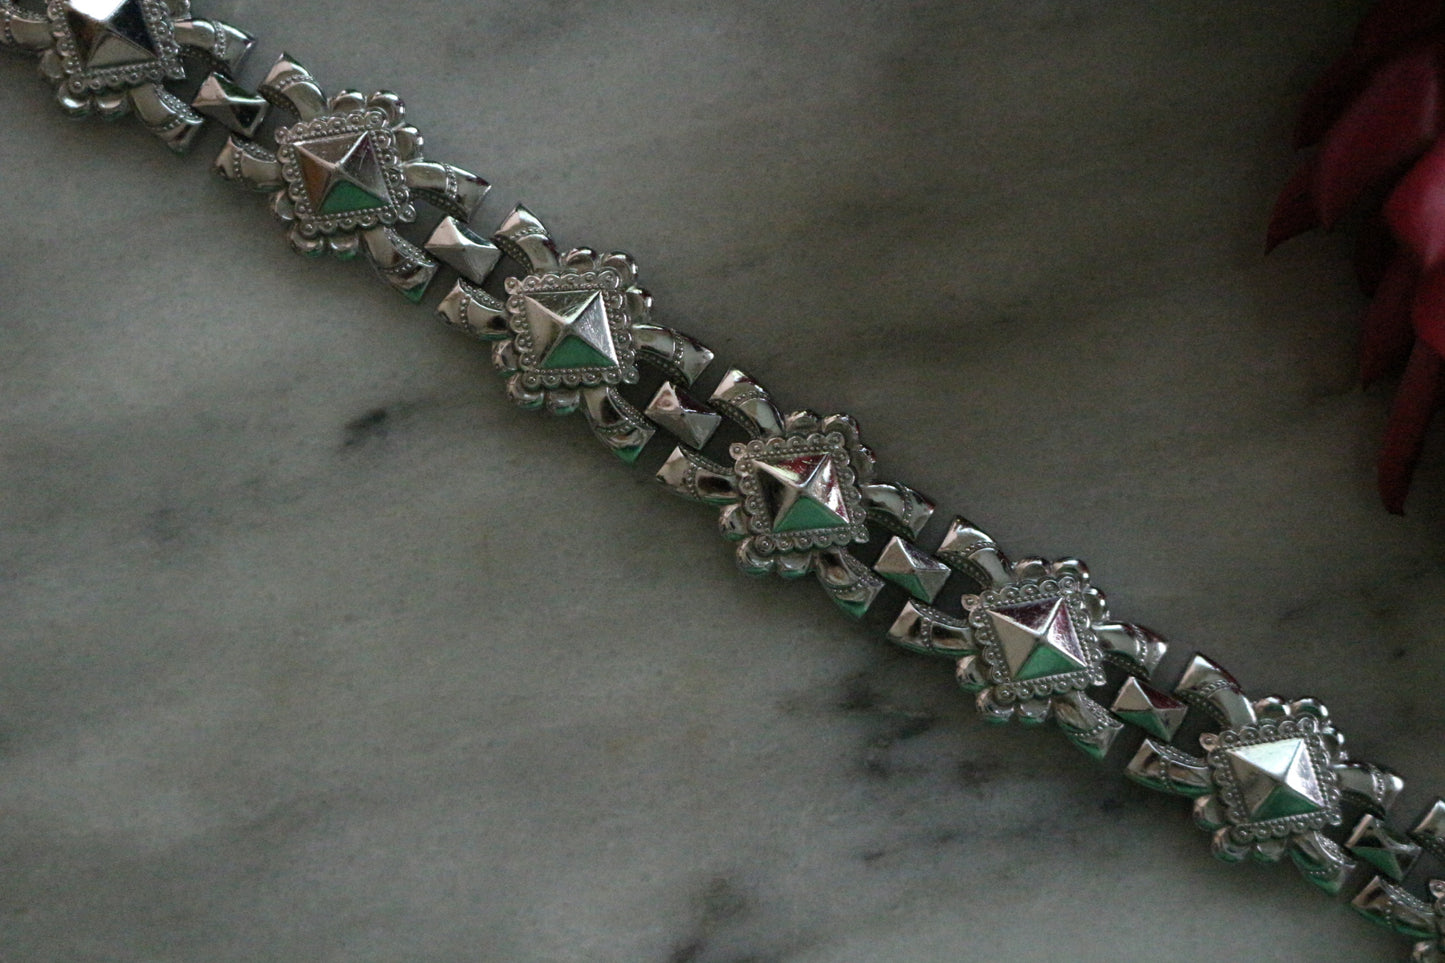 Vintage 1940s Art Deco Style Silver Tone Linked Bracelet